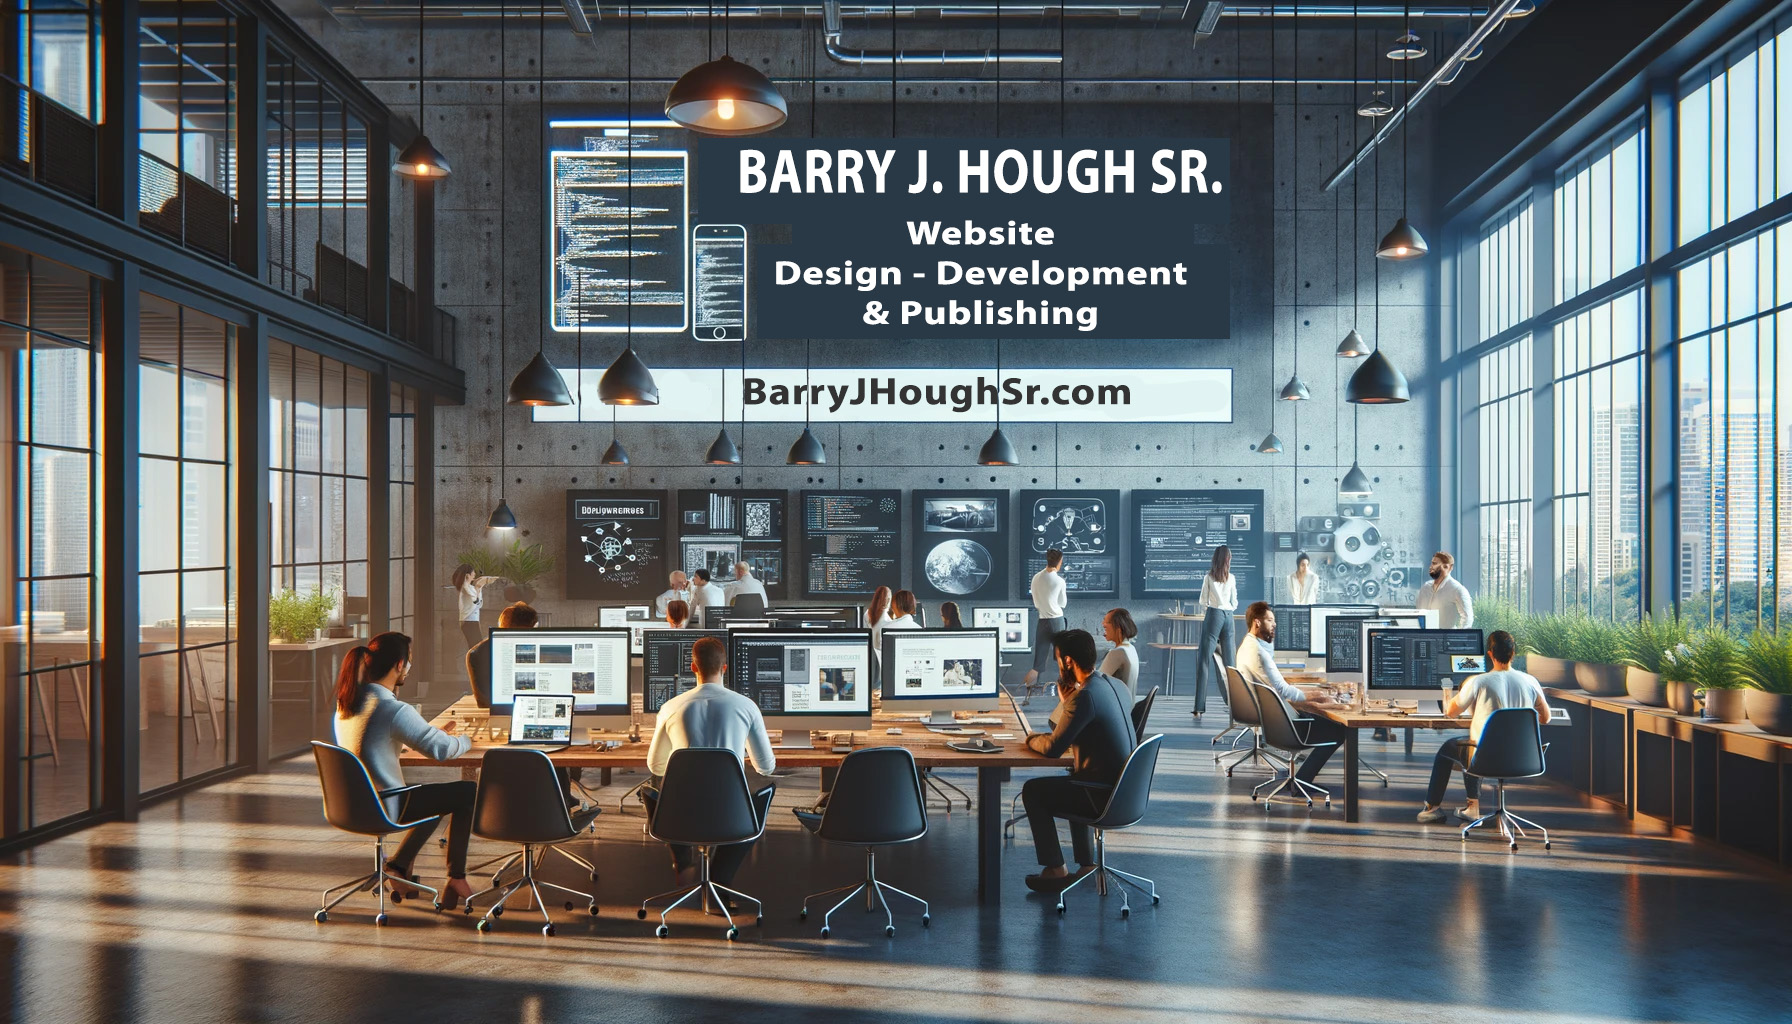 Website Design - Development & Publishing - Barry J. Hough Sr.